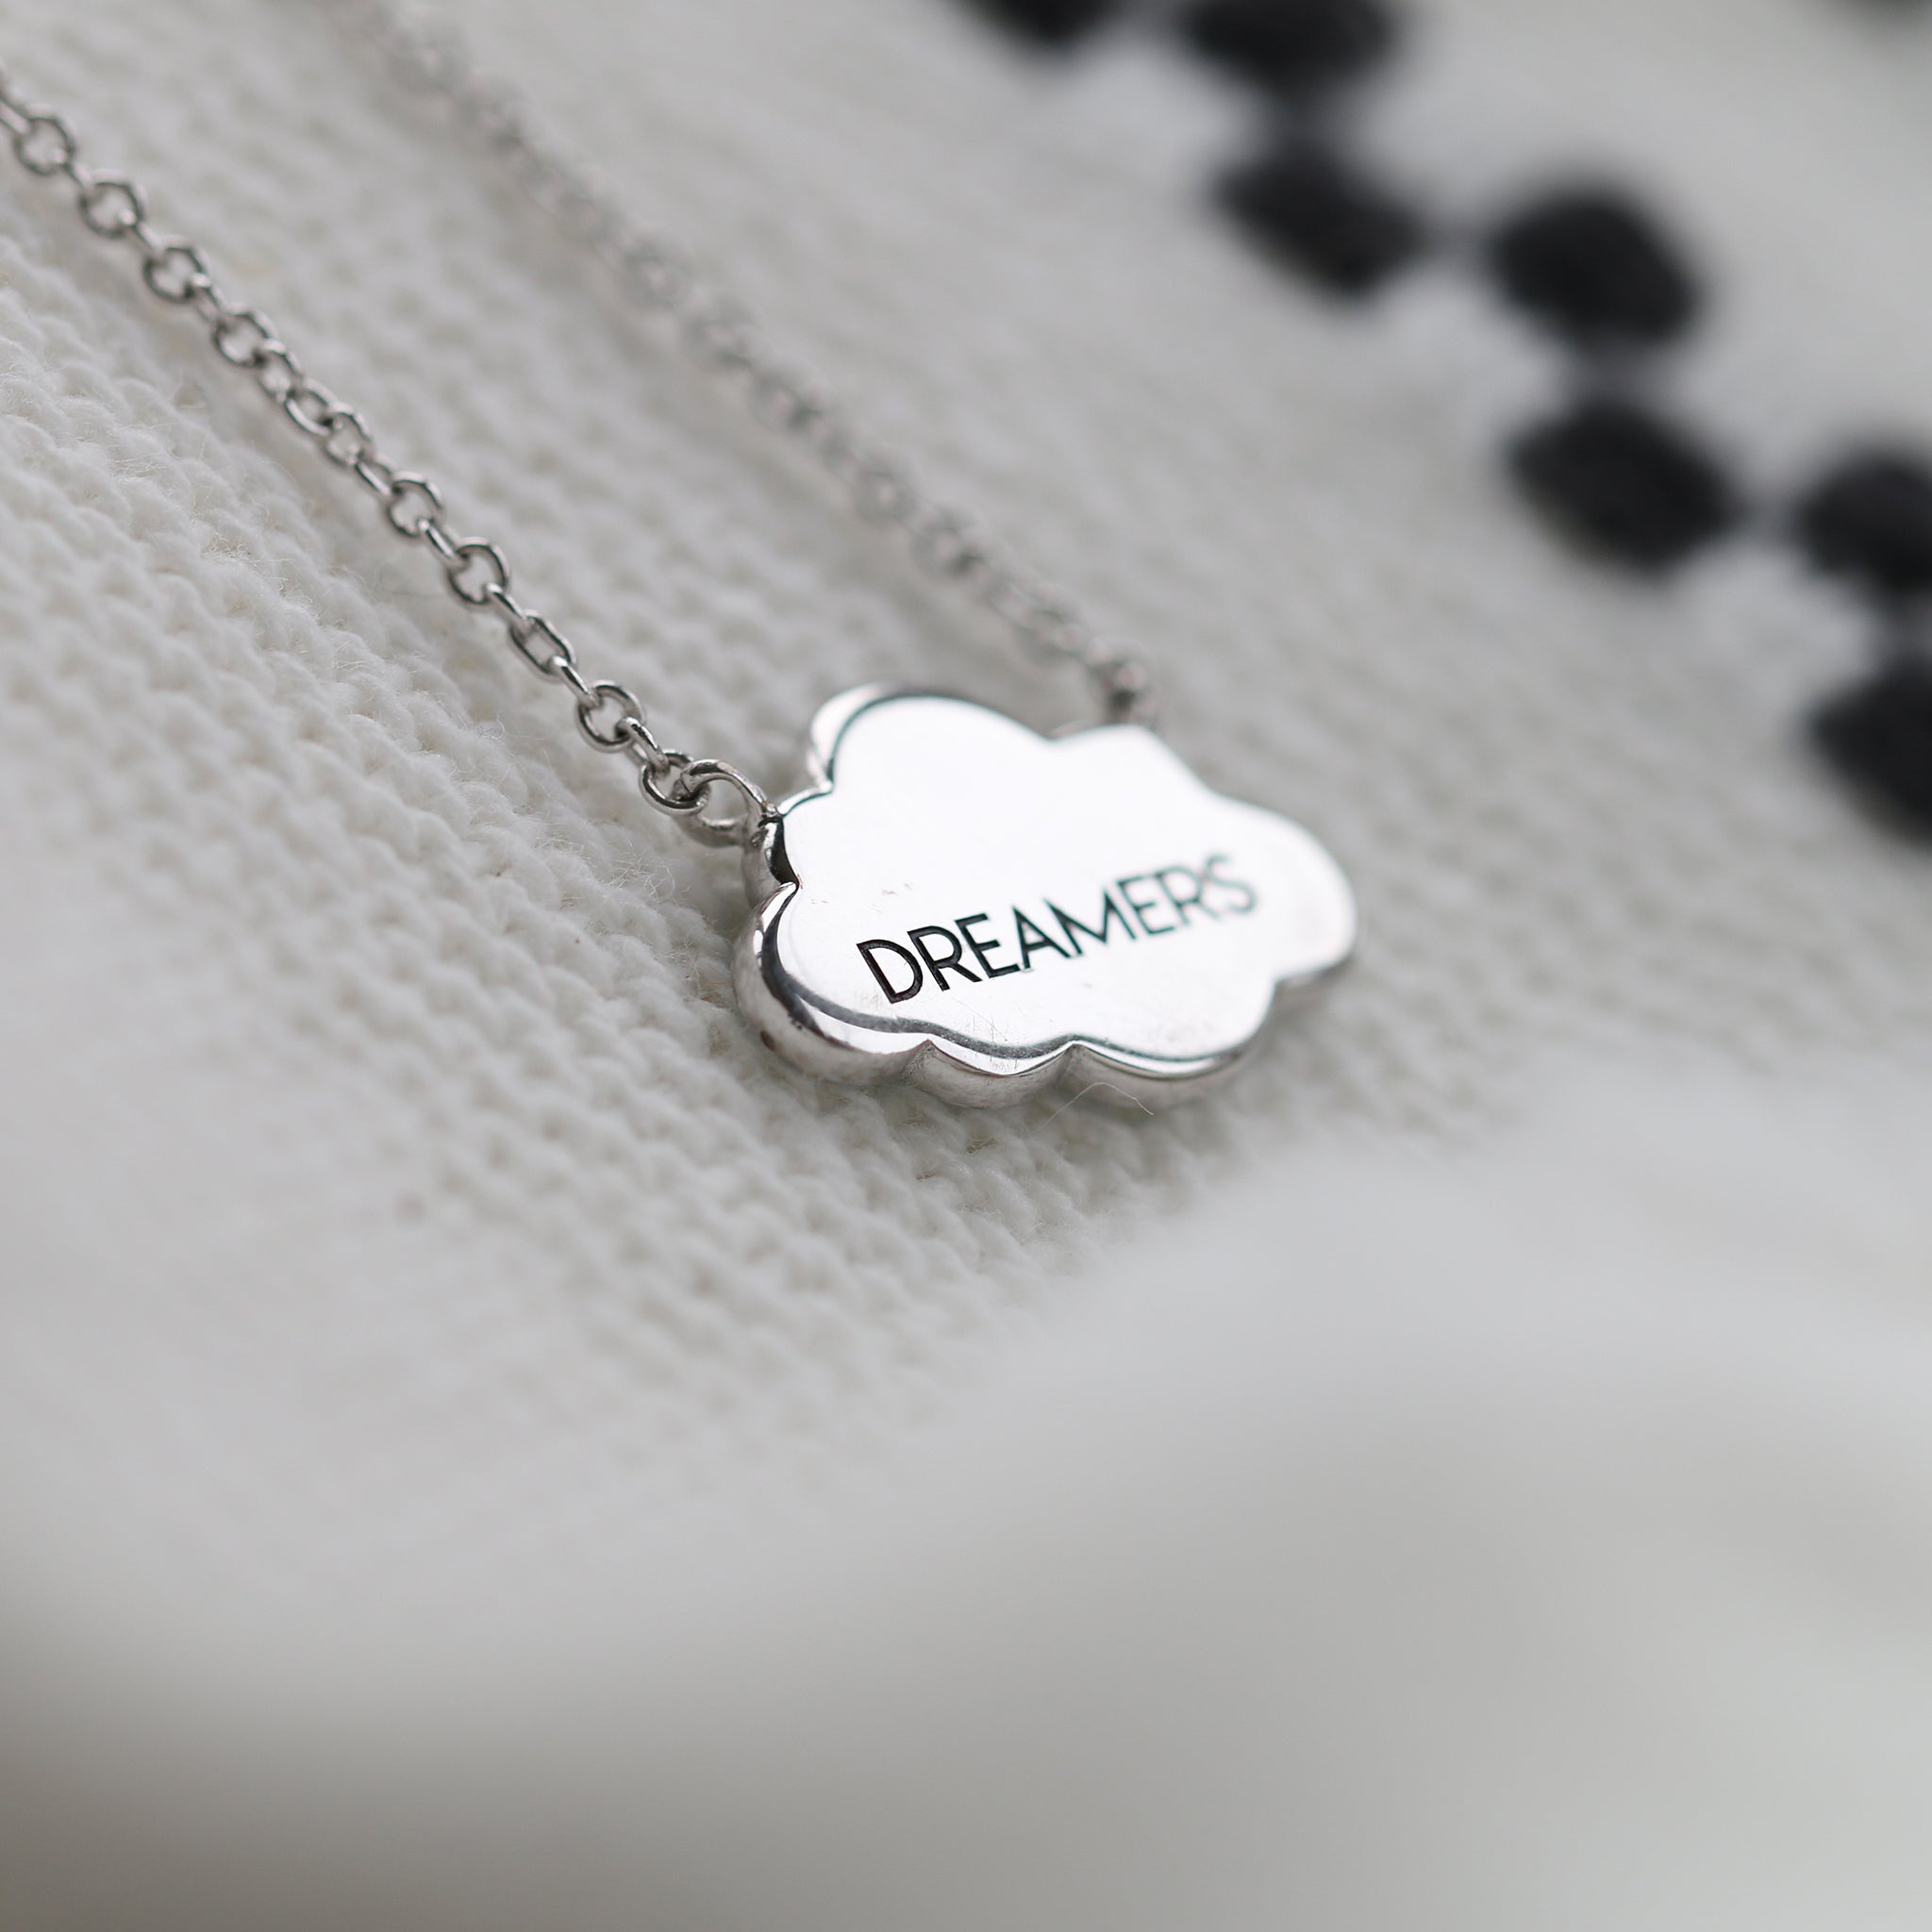 Dreamers Necklace - Seek+Find